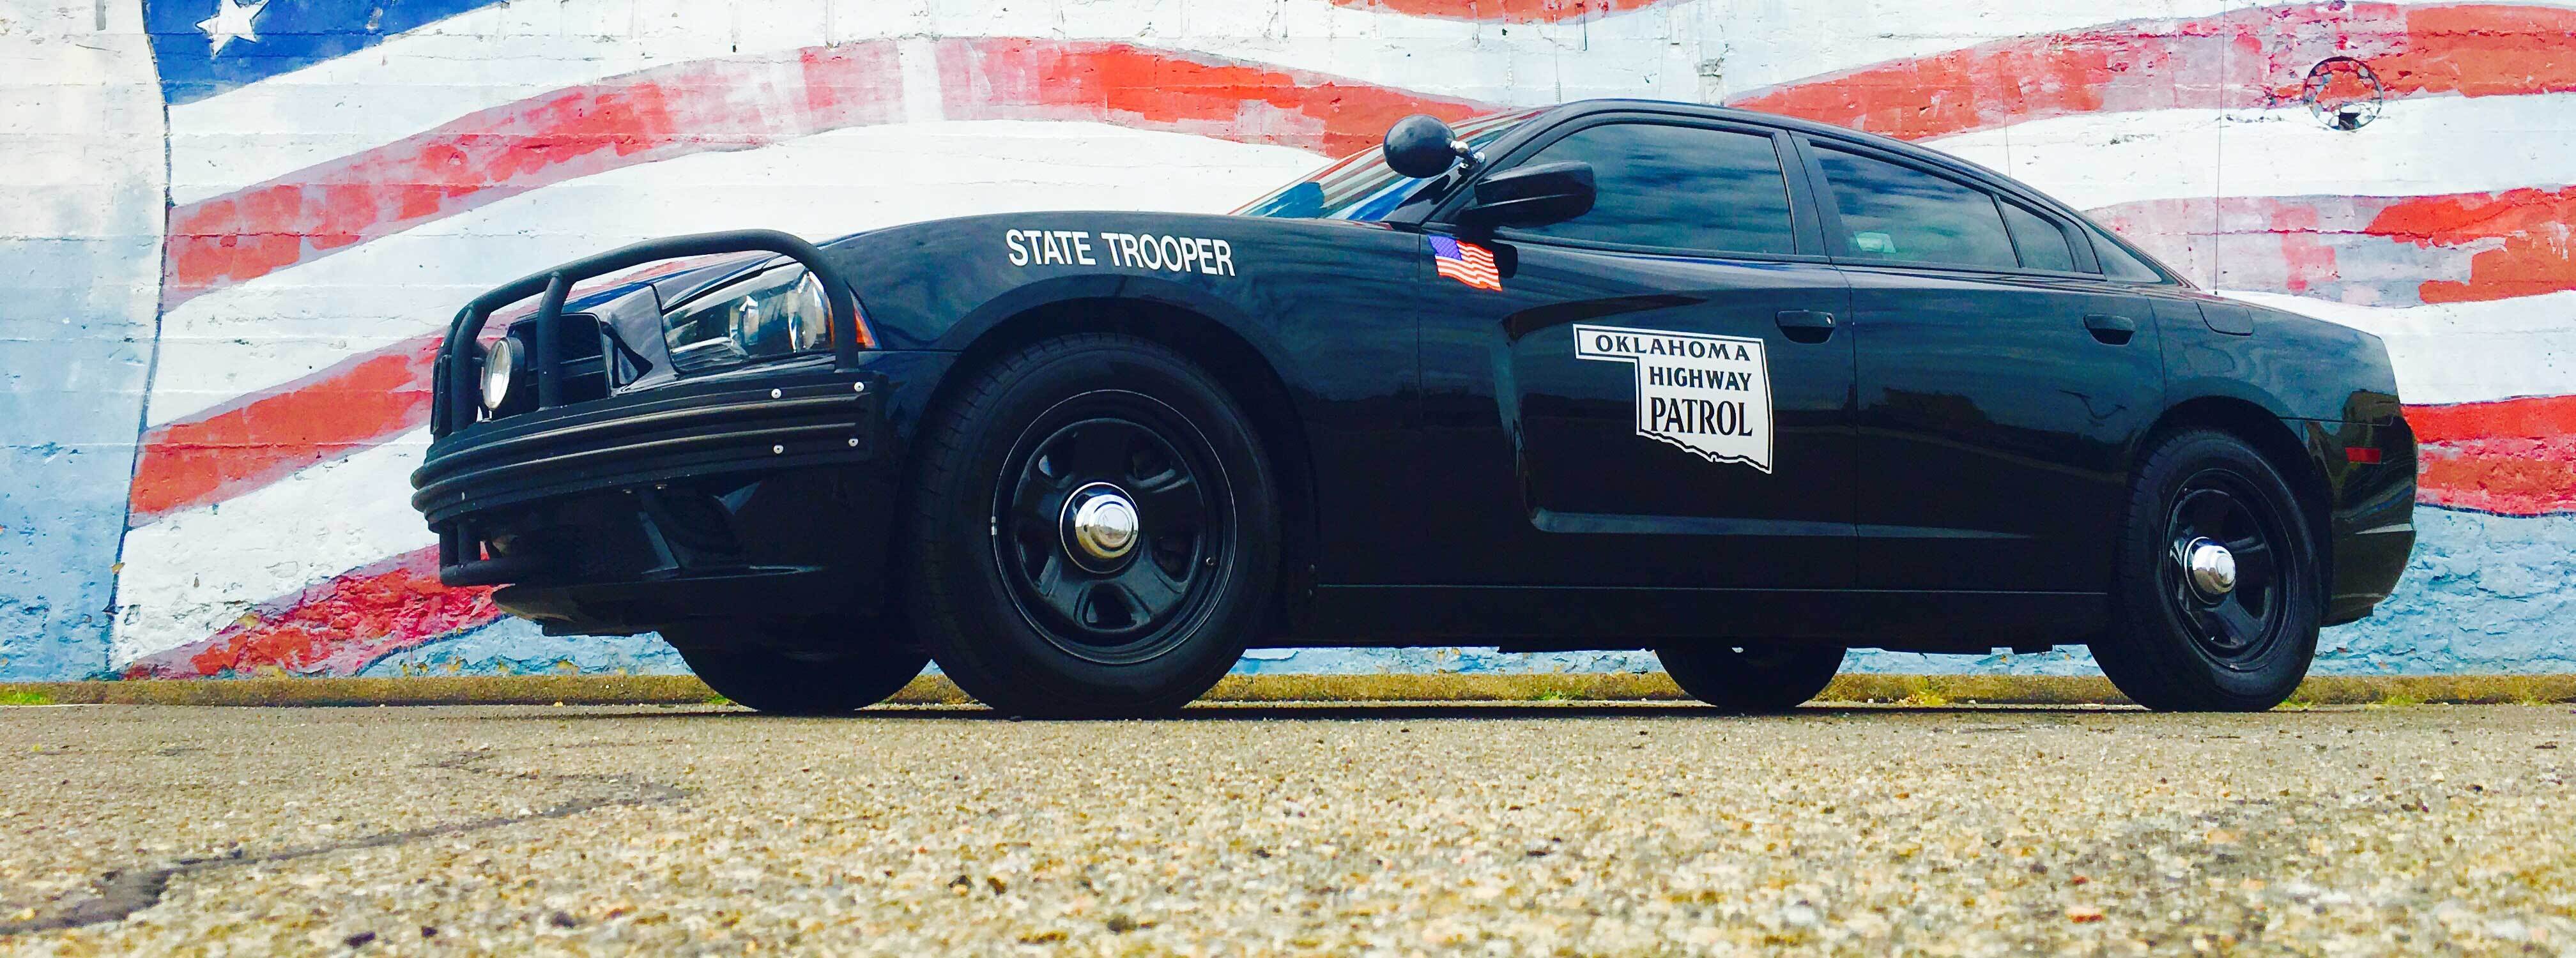 Oklahoma Highway Patrol - Train Like a Trooper Podcast